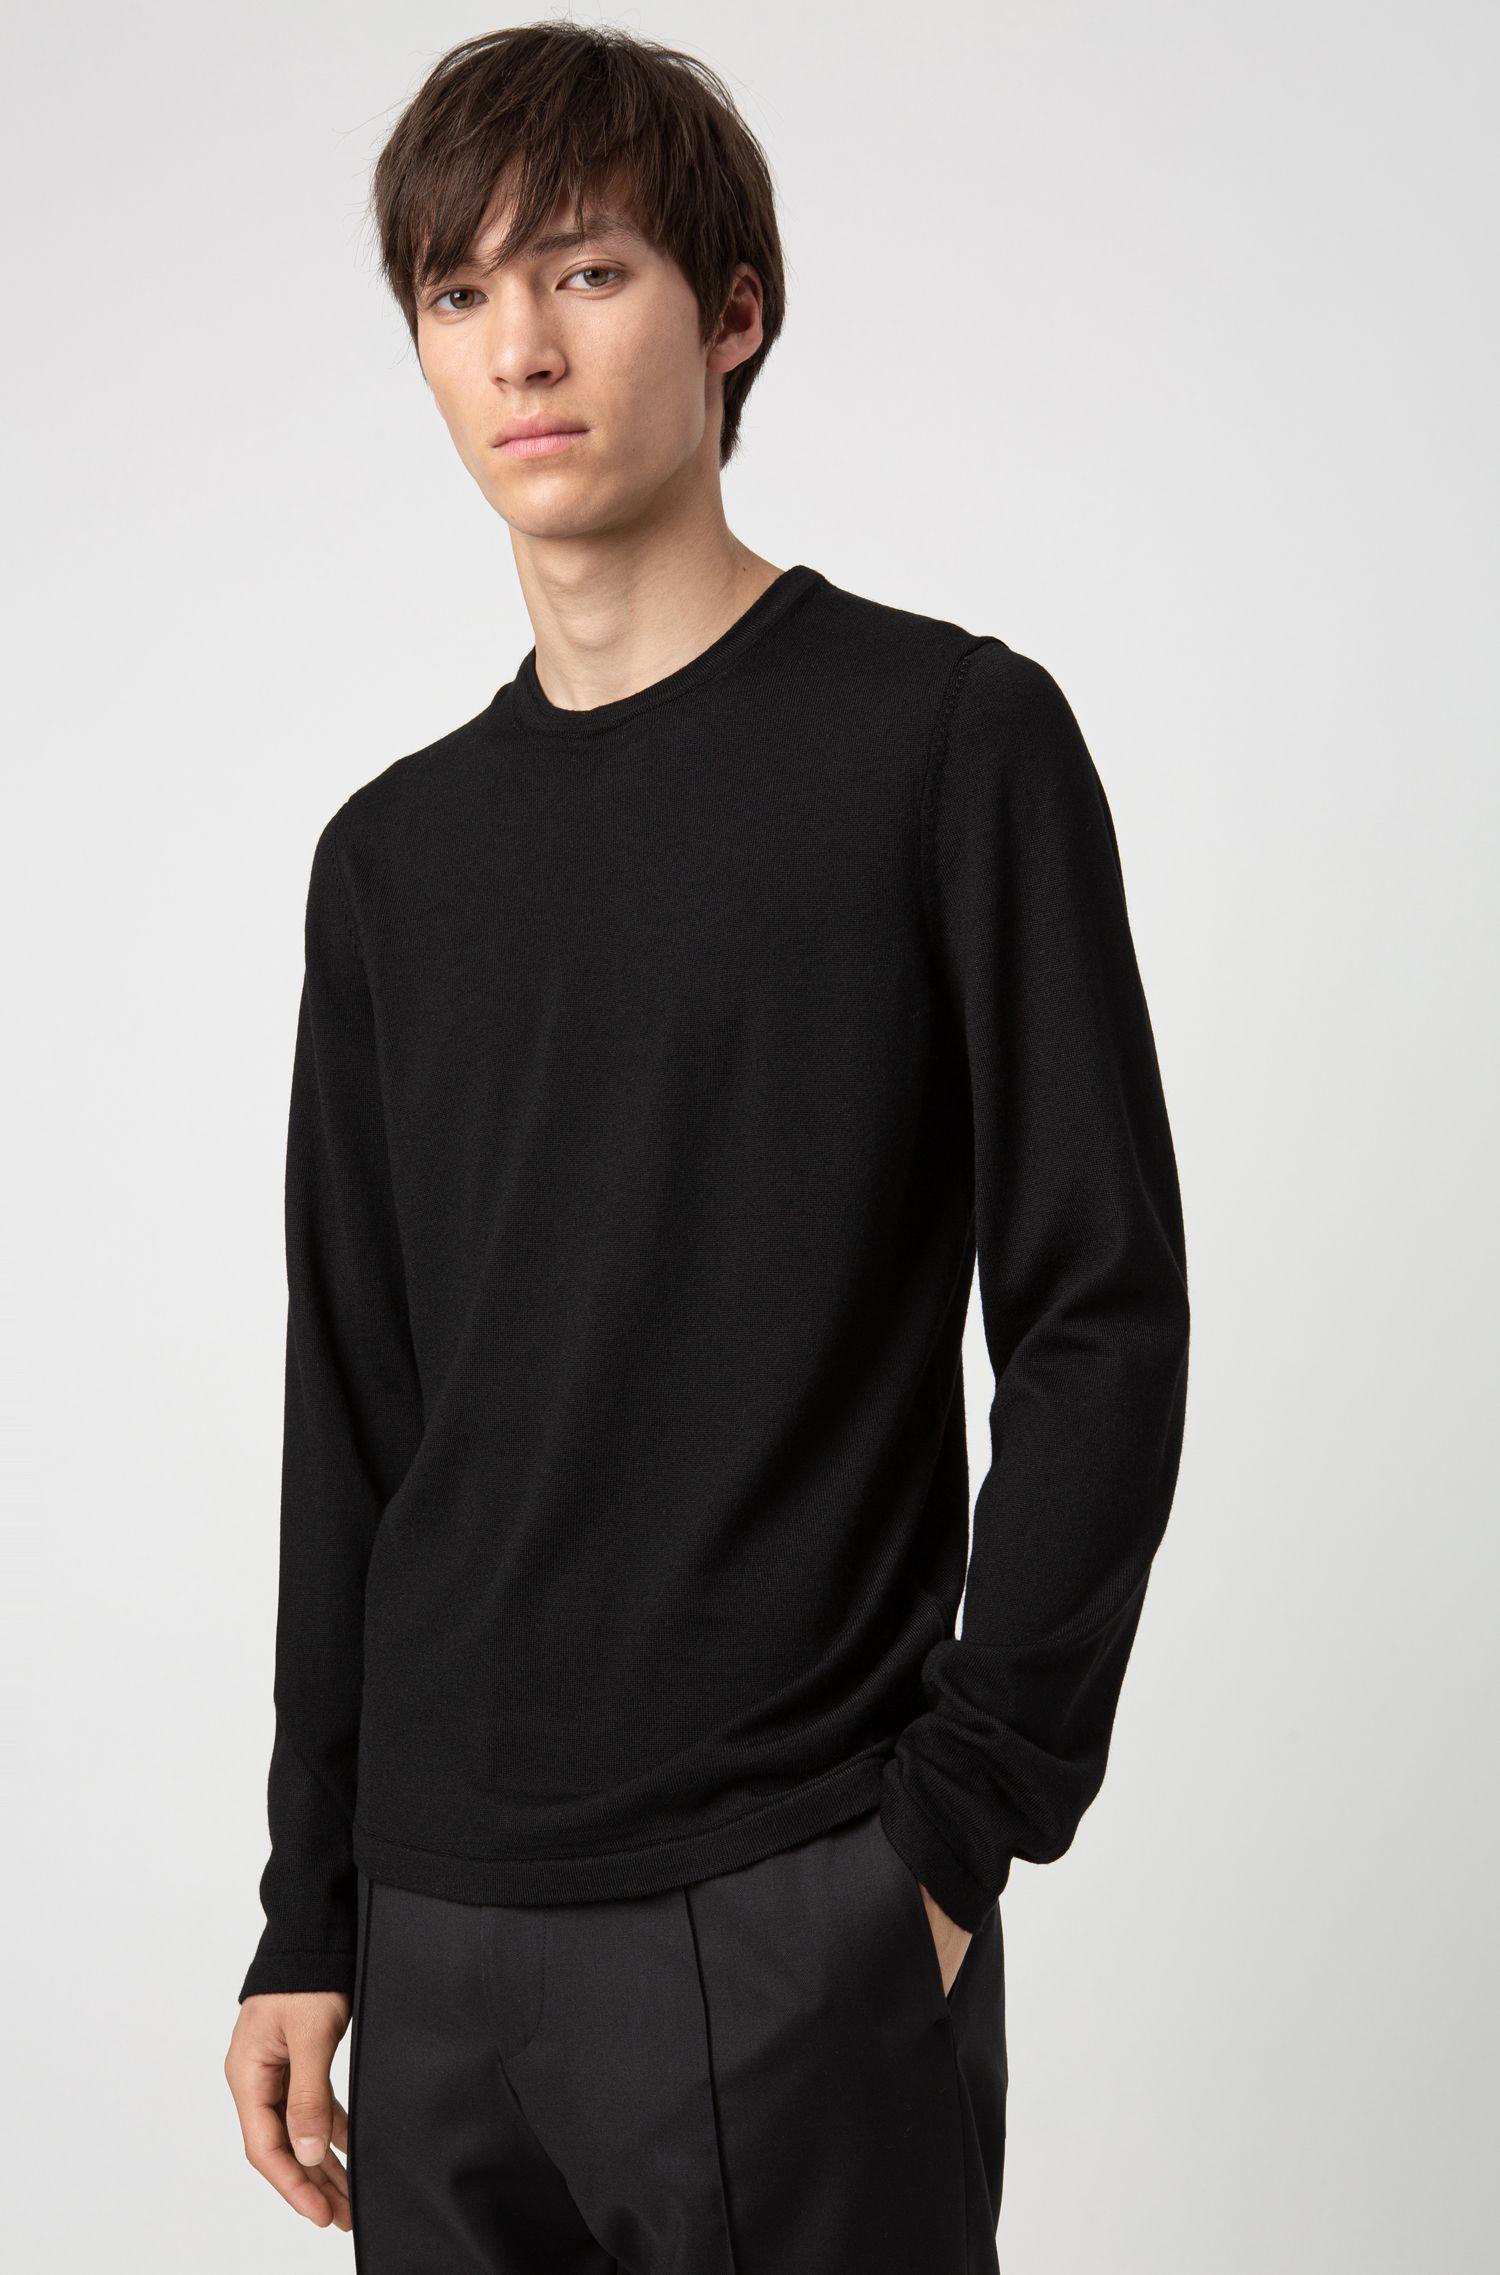 HUGO Crew-neck Sweater In Merino Wool in Black for Men - Lyst